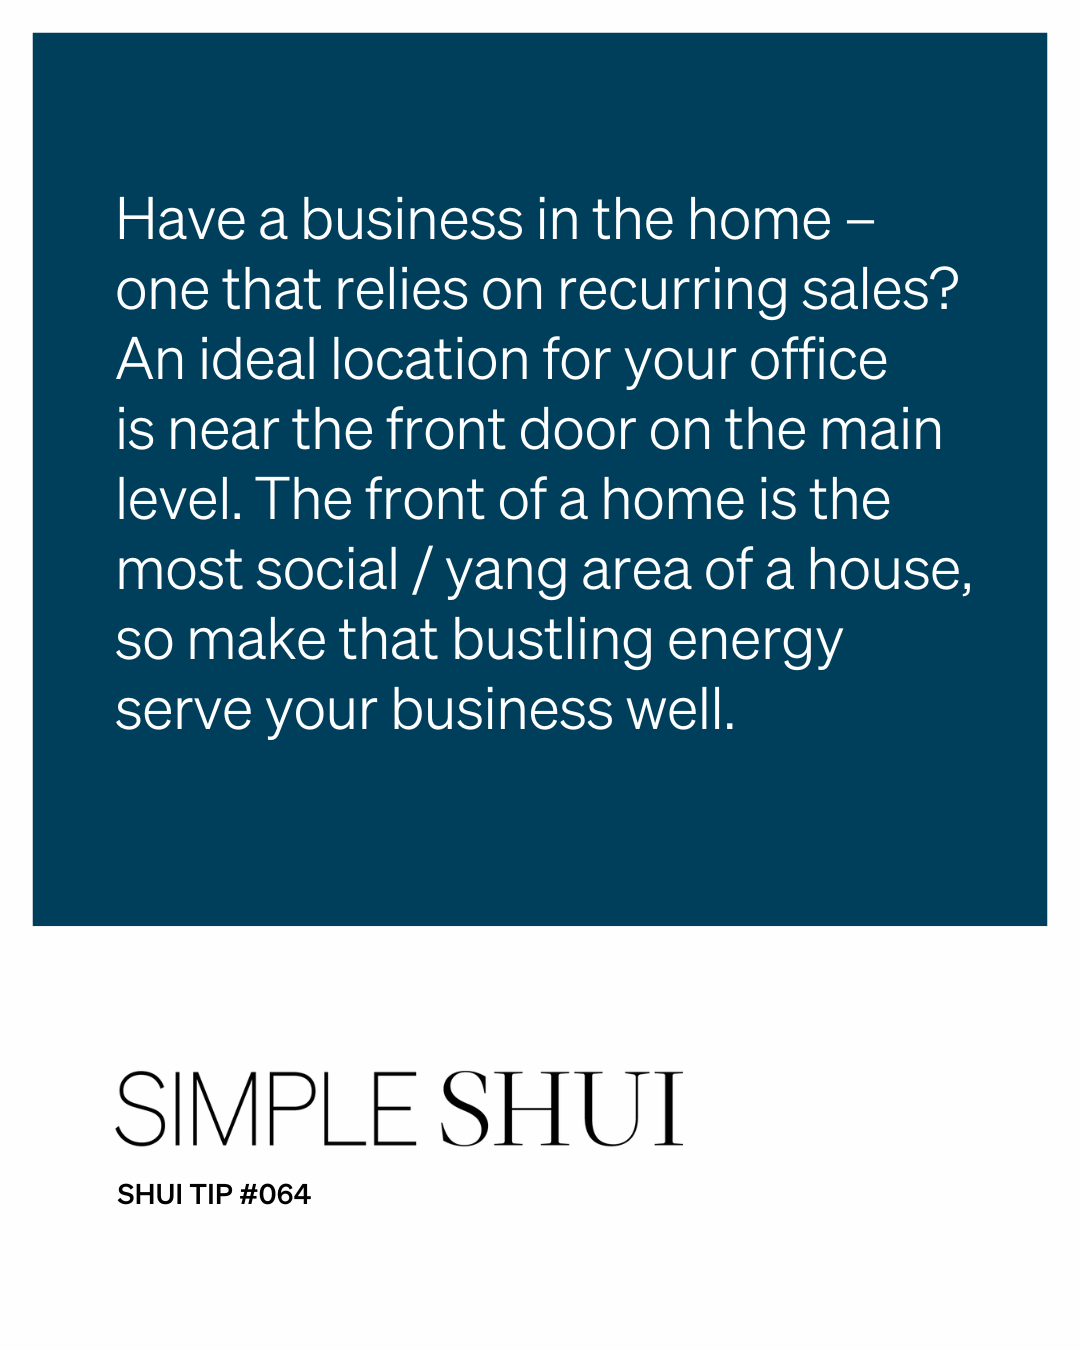 simple shui tip: location, location, location!